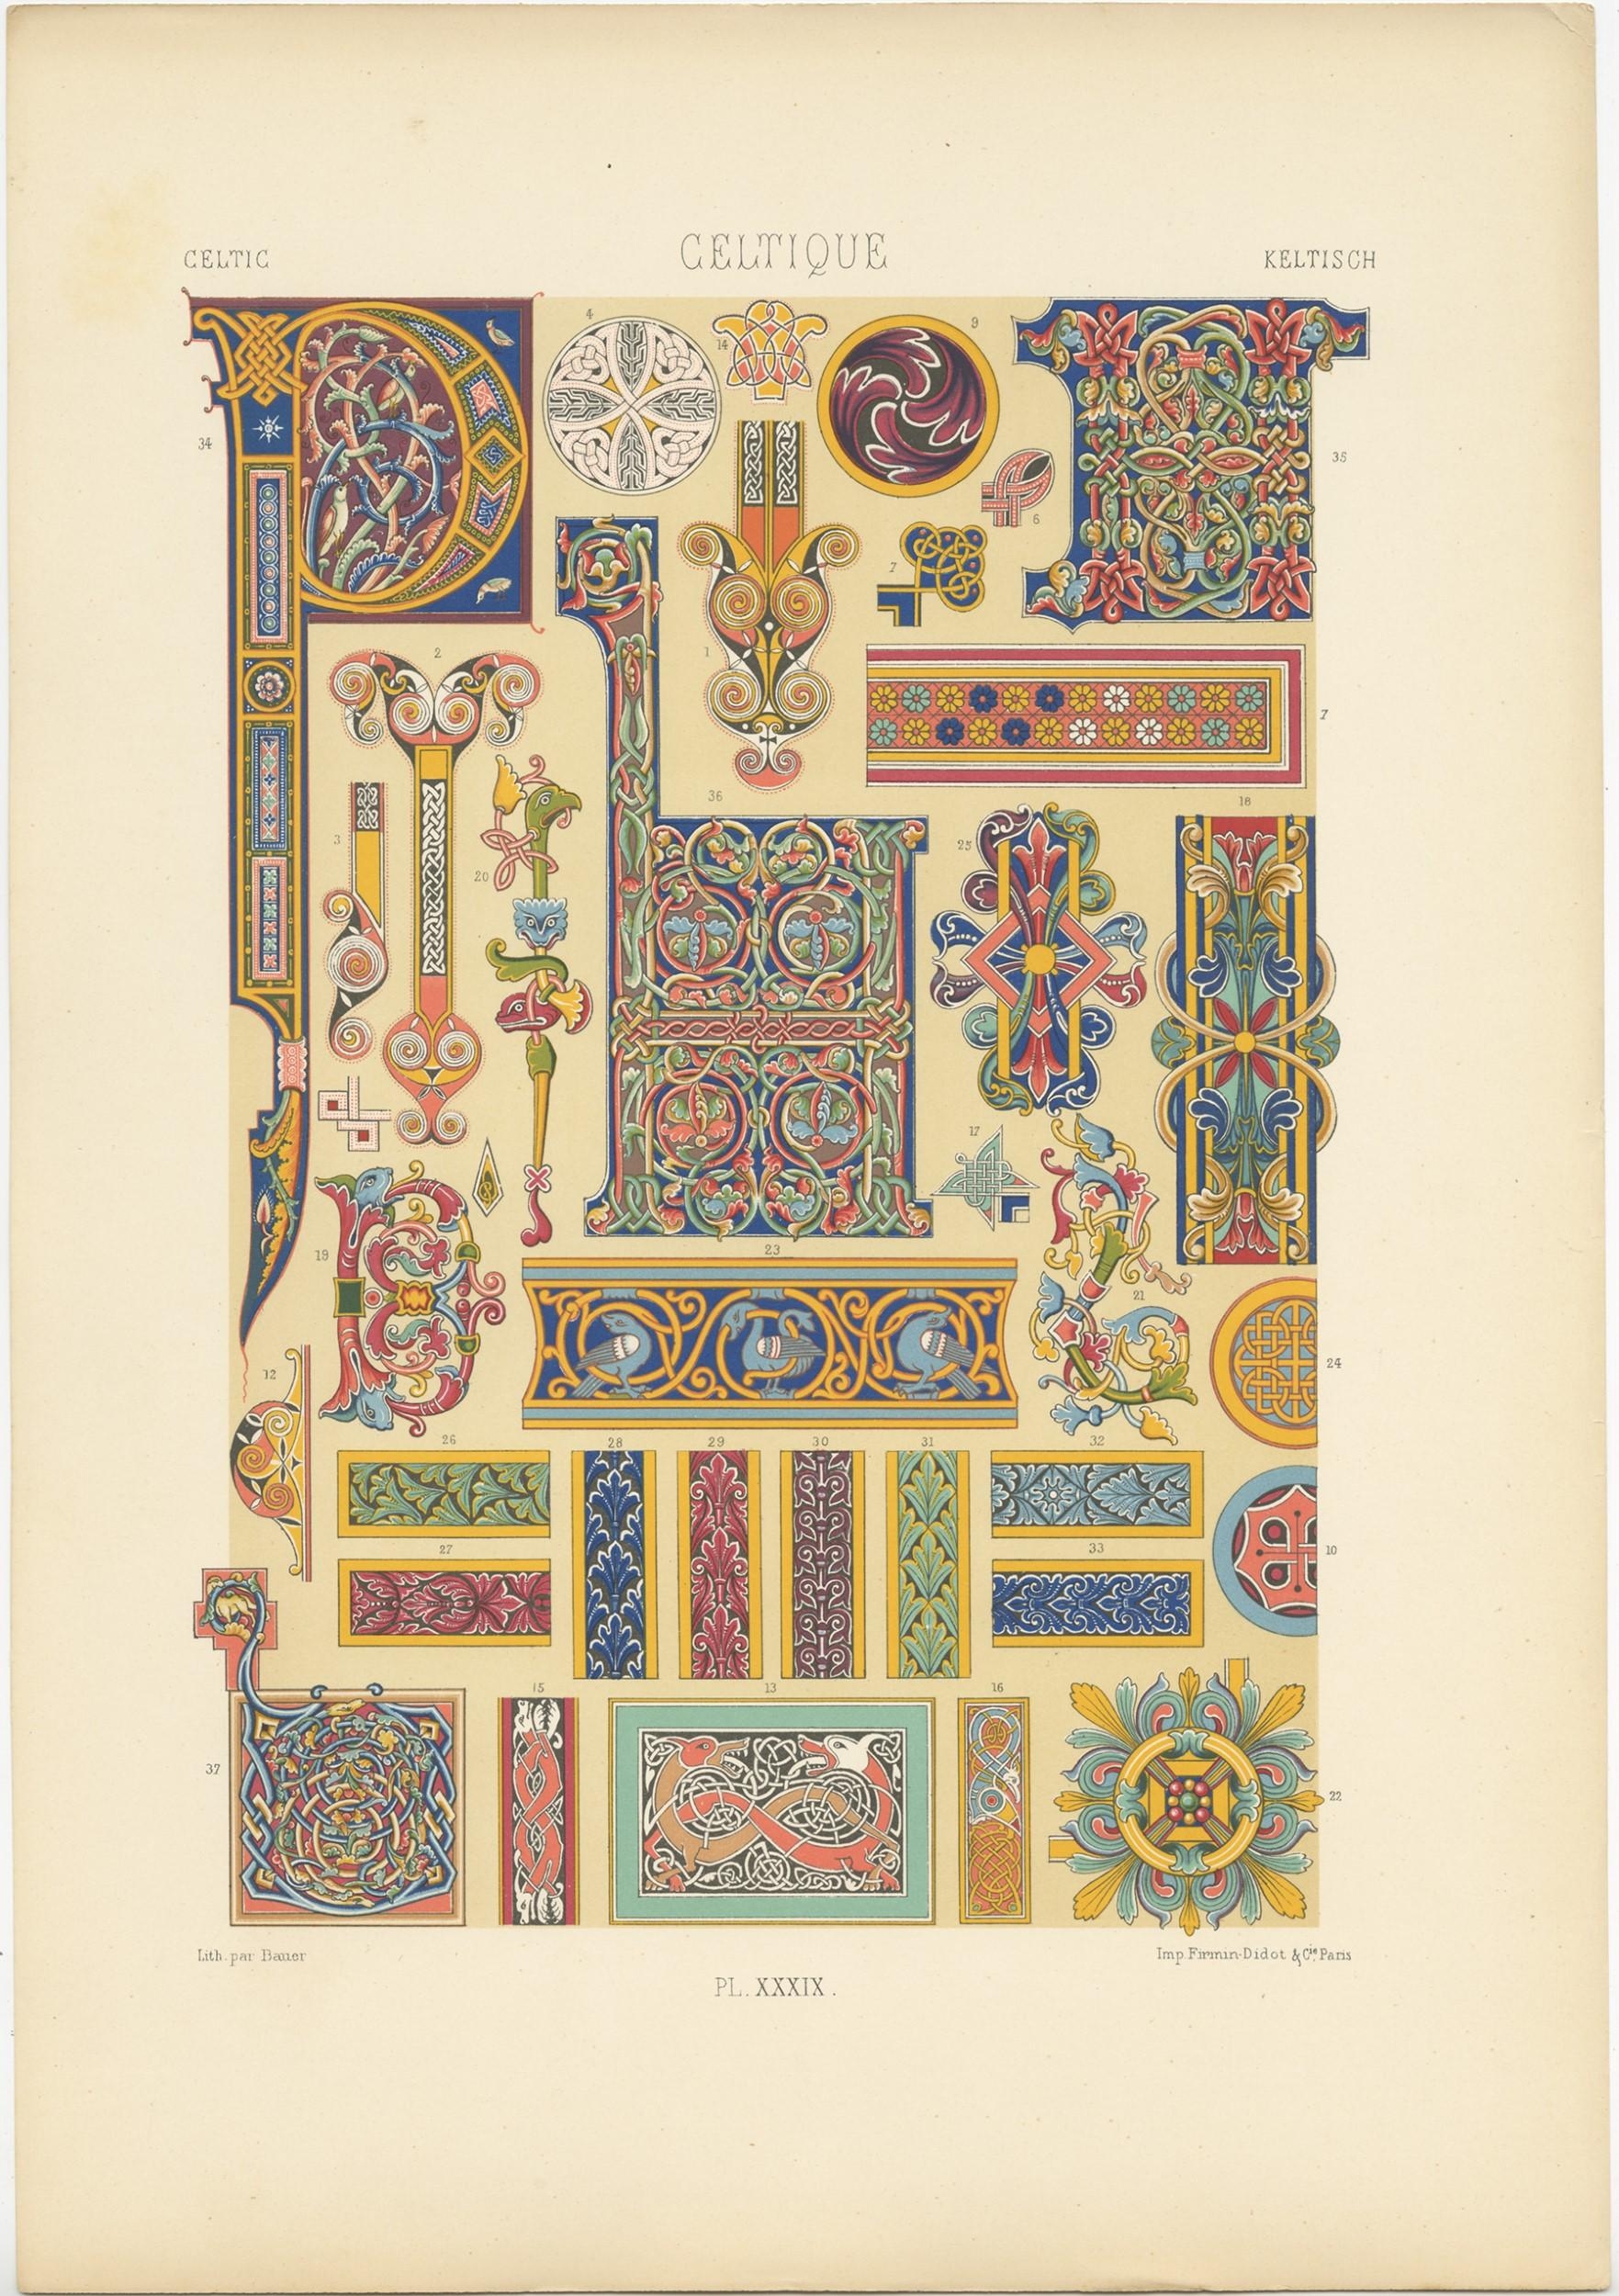 Antique print titled 'Celtic - Celtique - Keltisch'. Chromolithograph of Celtic ornaments and decorative arts. This print originates from 'l'Ornement Polychrome' by Auguste Racinet. Published circa 1890.